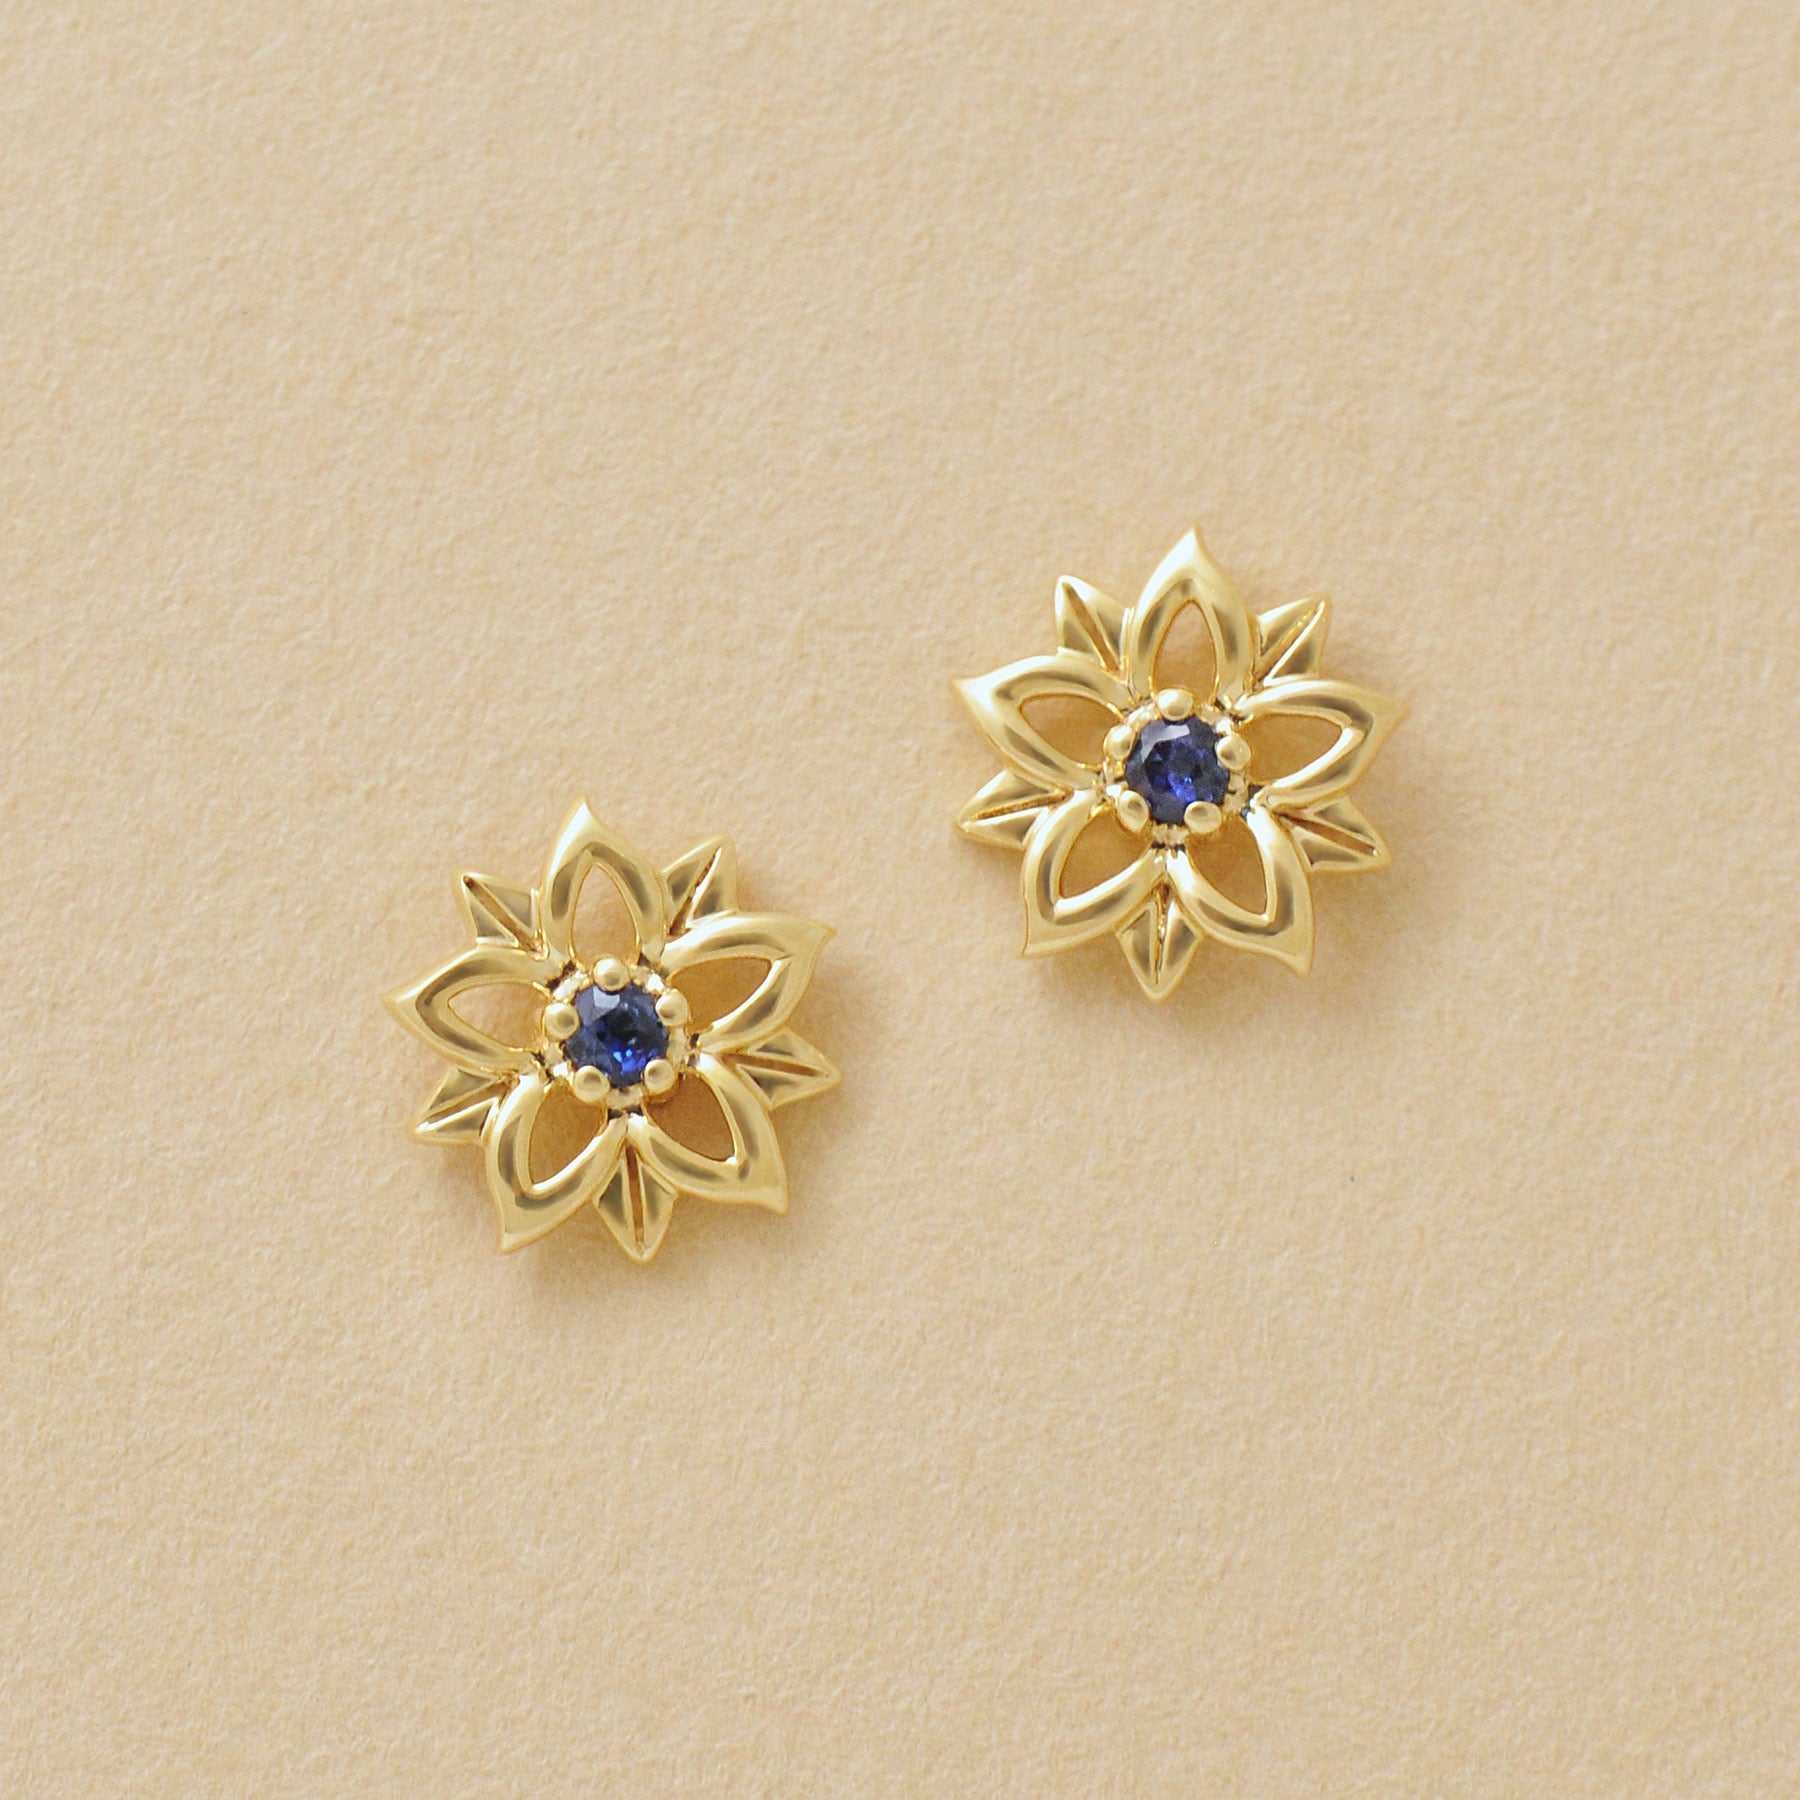 [Birth Flower Jewelry] September - Gentian Openwork Earrings (18K/10K Yellow Gold) - Product Image